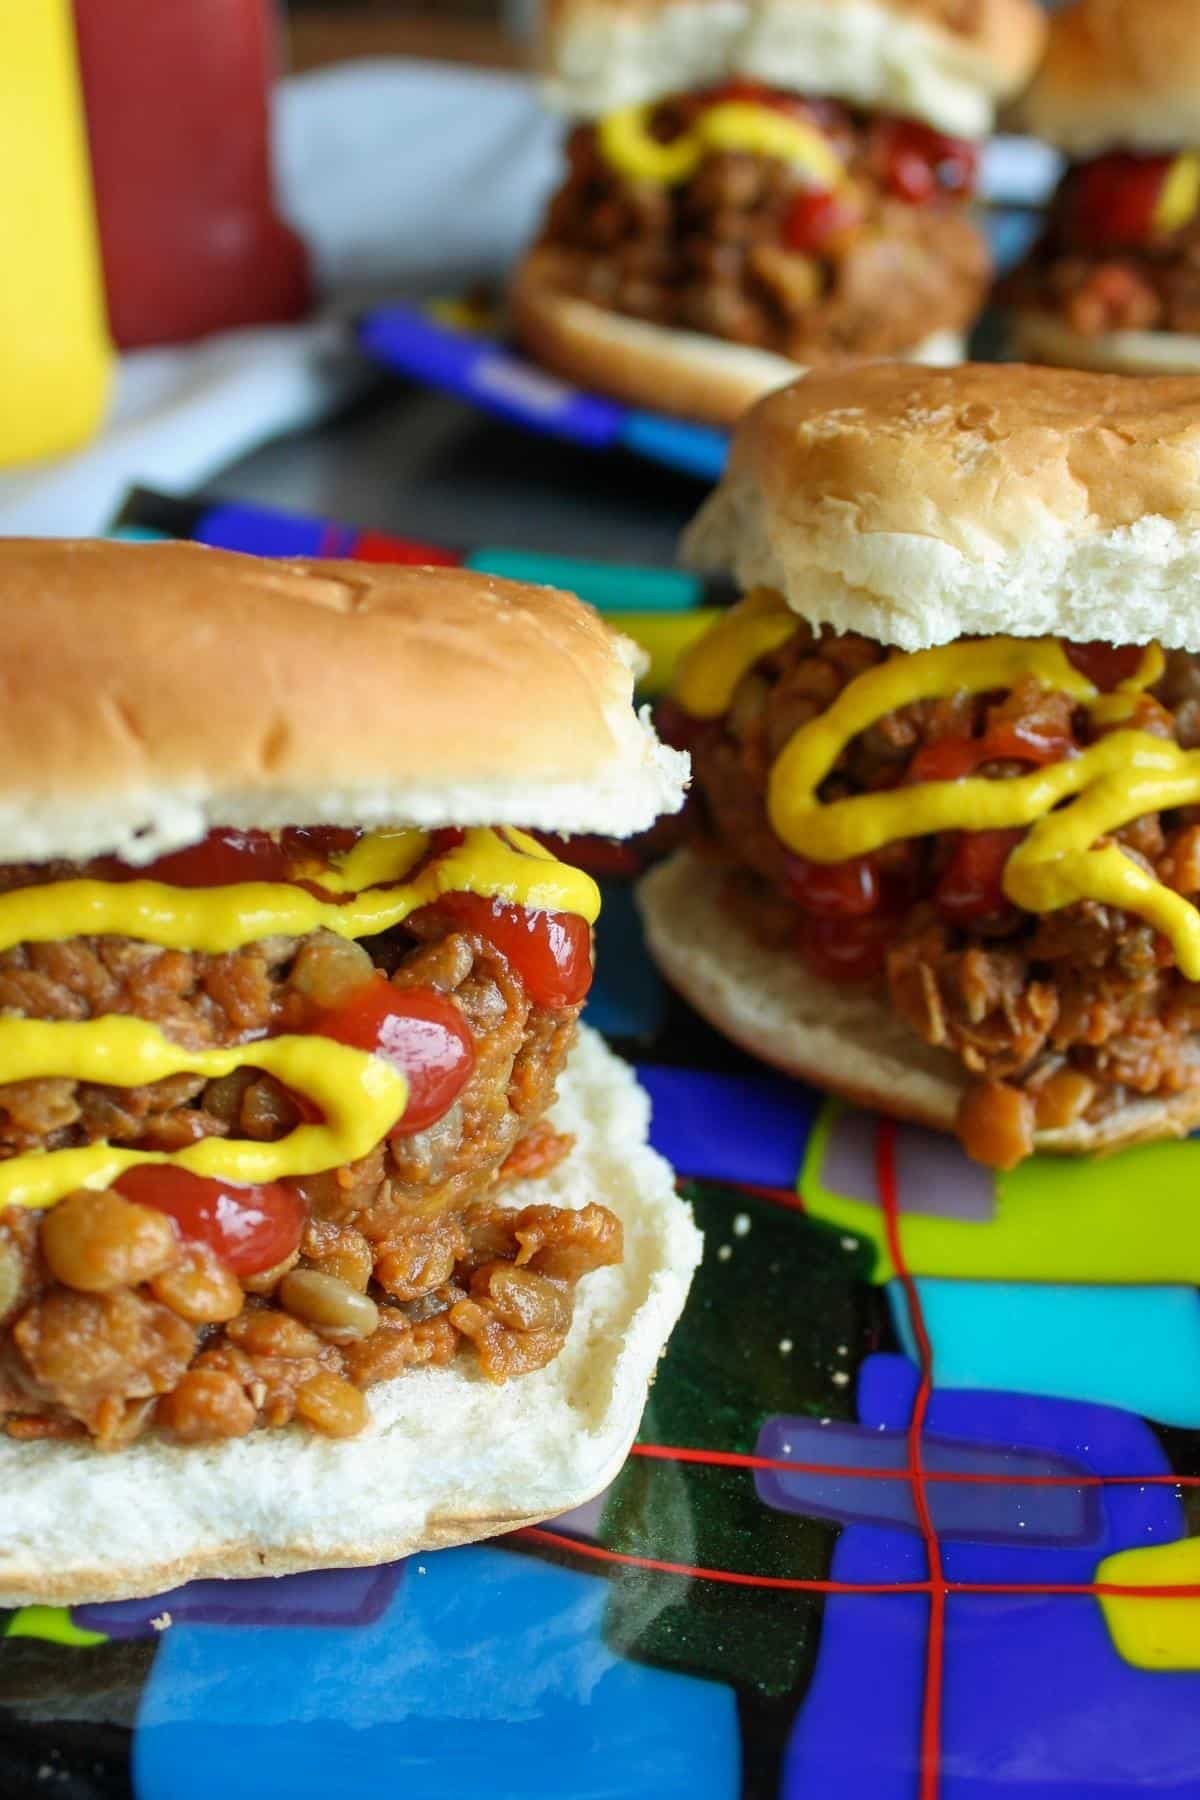 Vegan sloppy joes made with lentils on a hamburger bun on a plate.